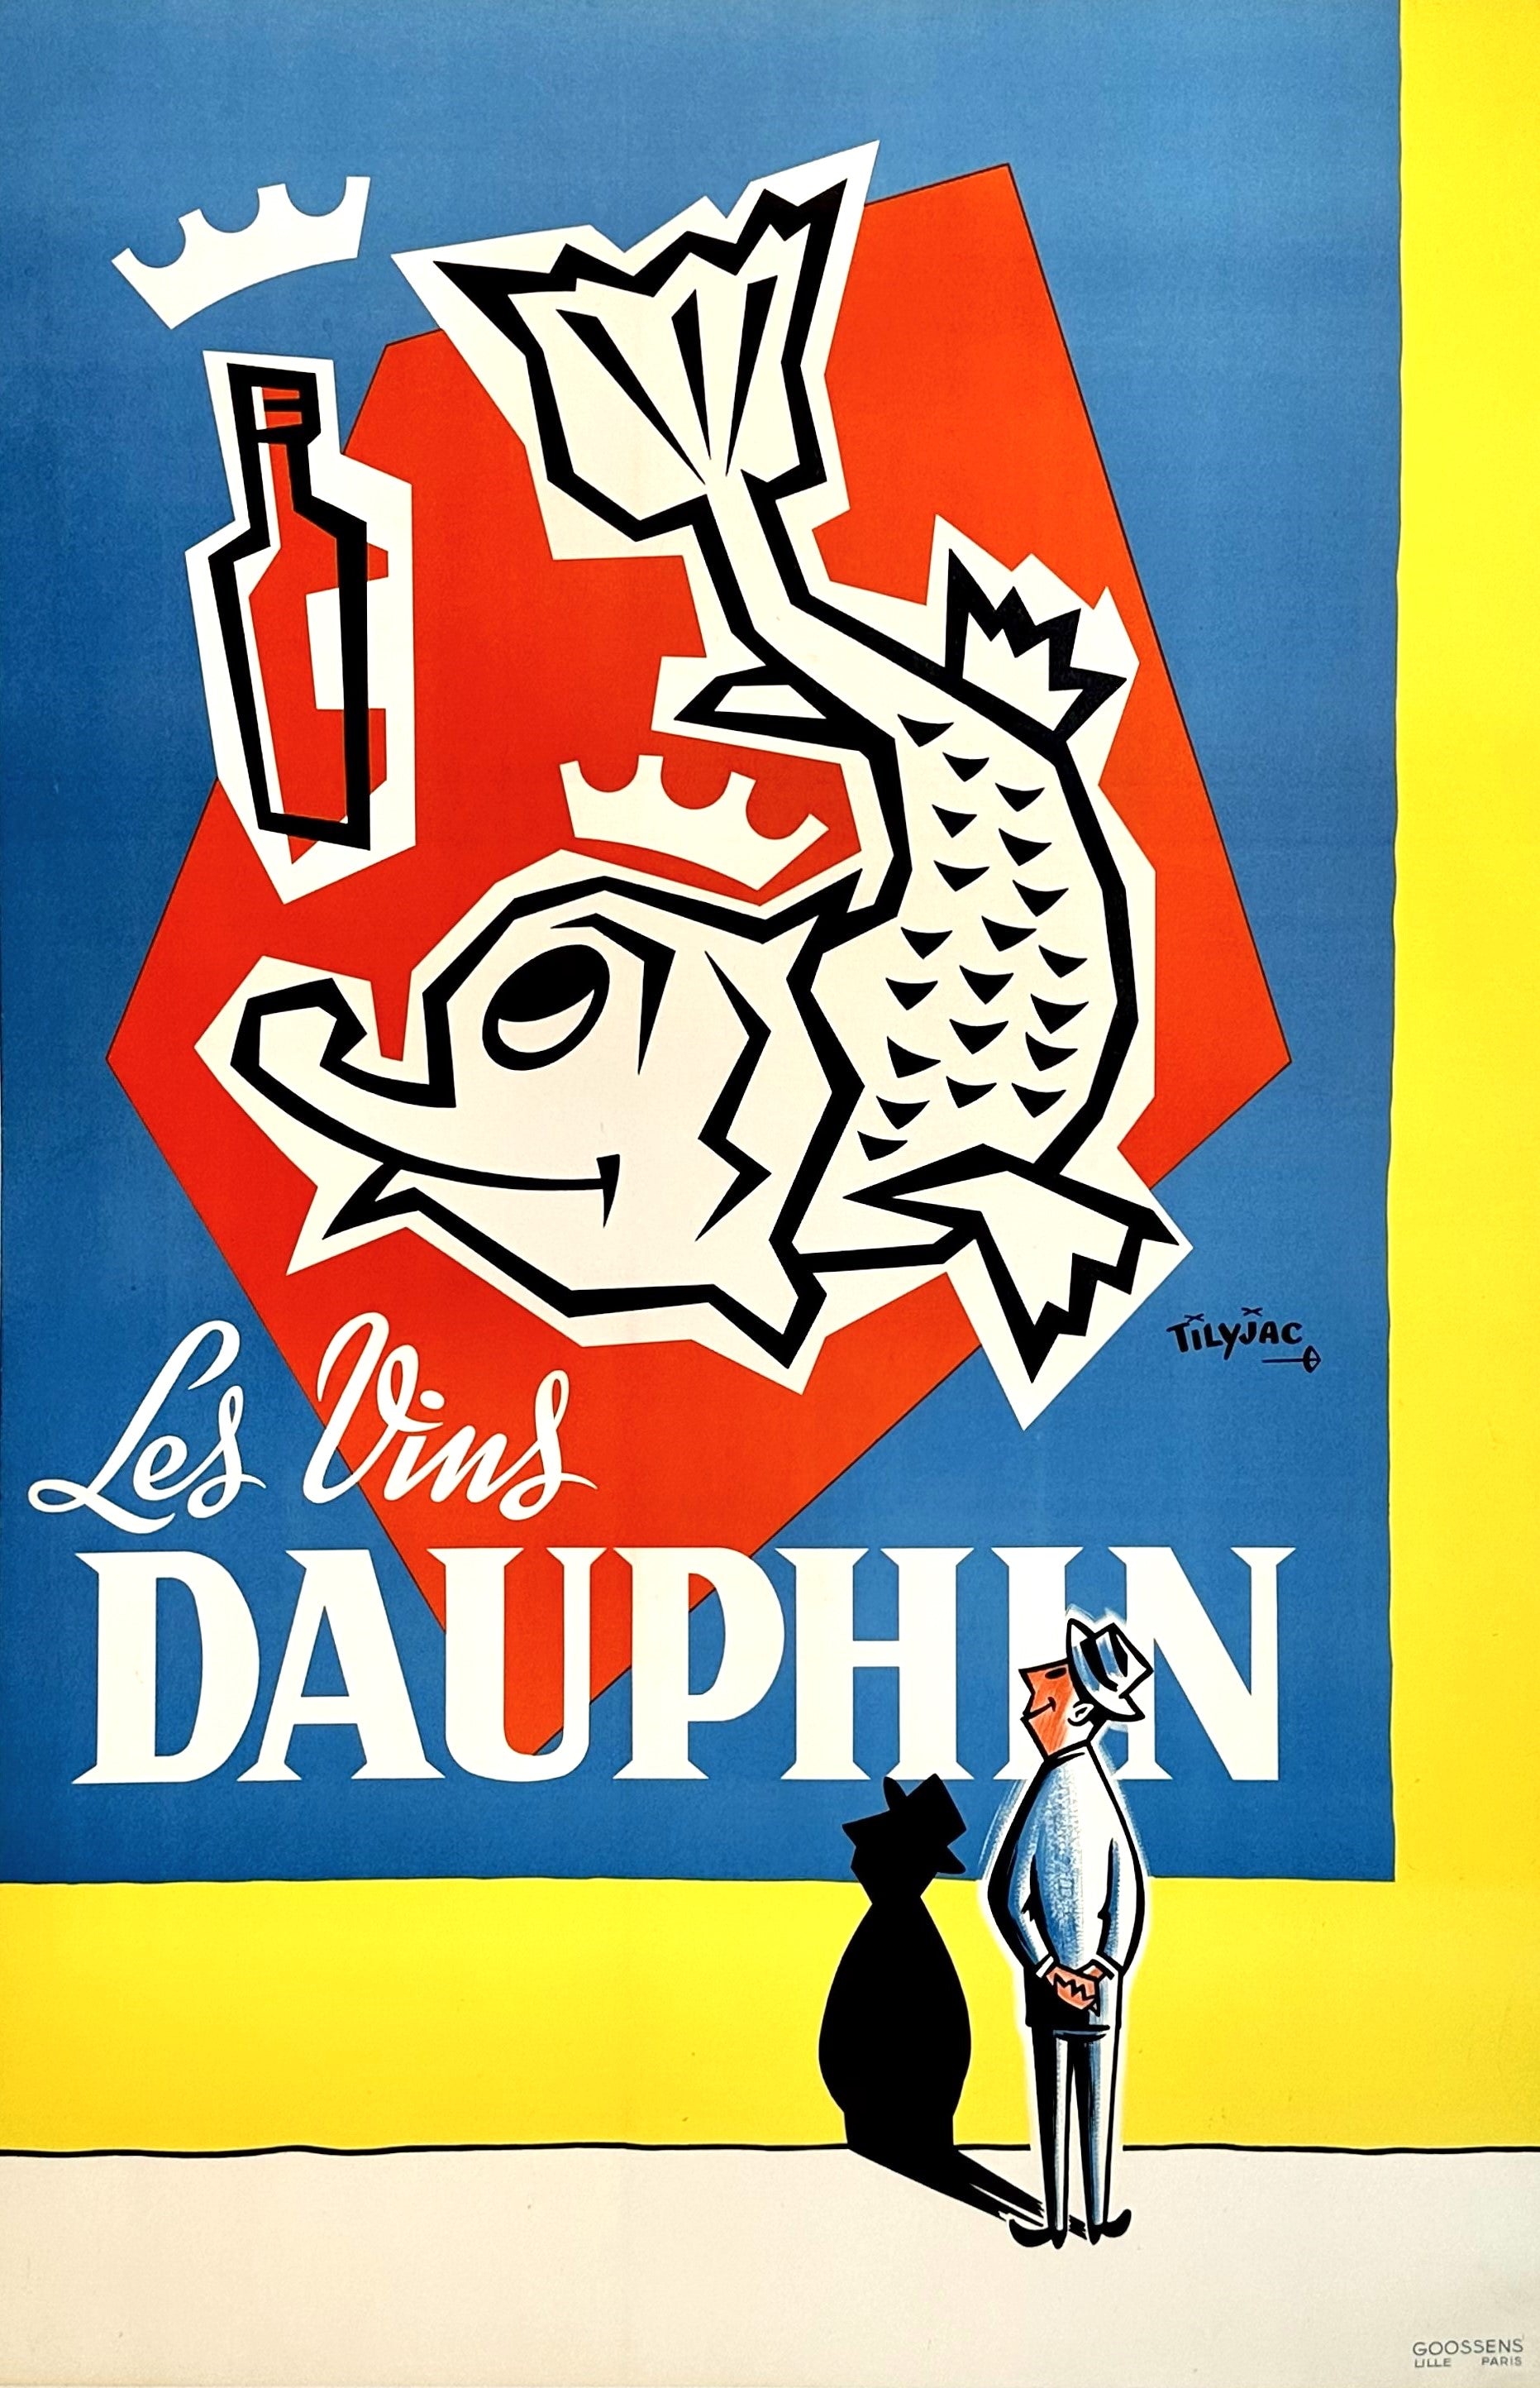 Les Vins Daupin by Tilyjac - Authentic Vintage Poster